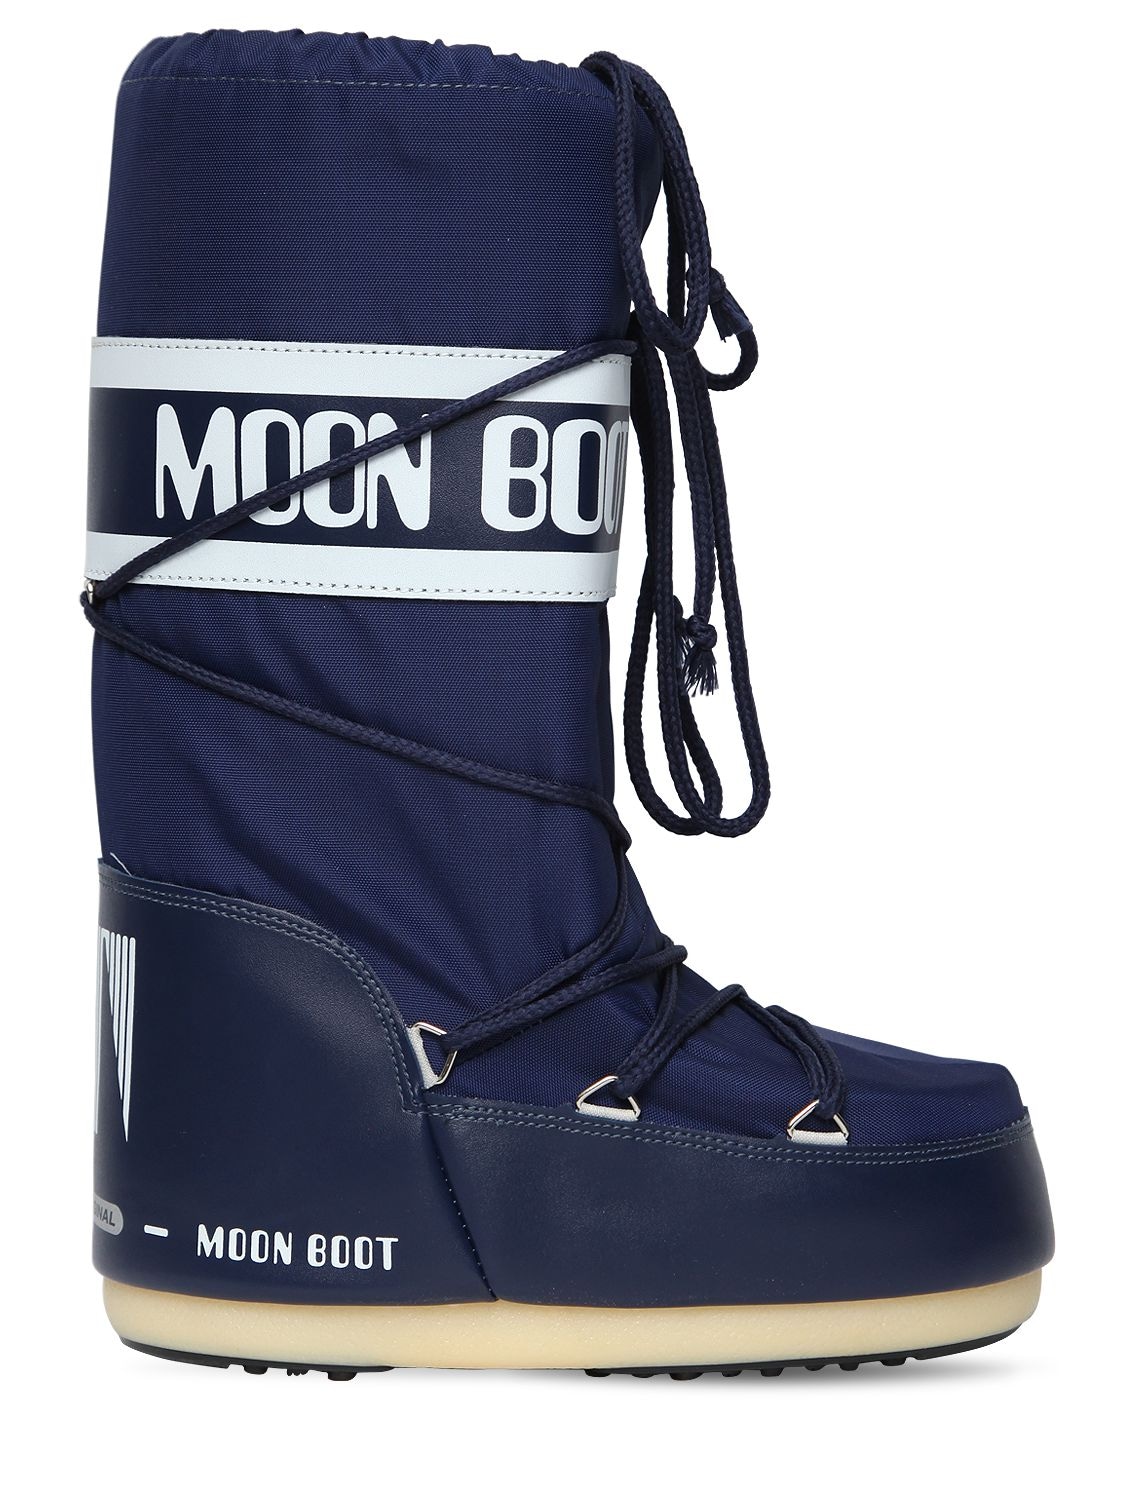 MOON BOOT "CLASSIC"尼龙防水雪地靴,68IDLA004-MDAy0